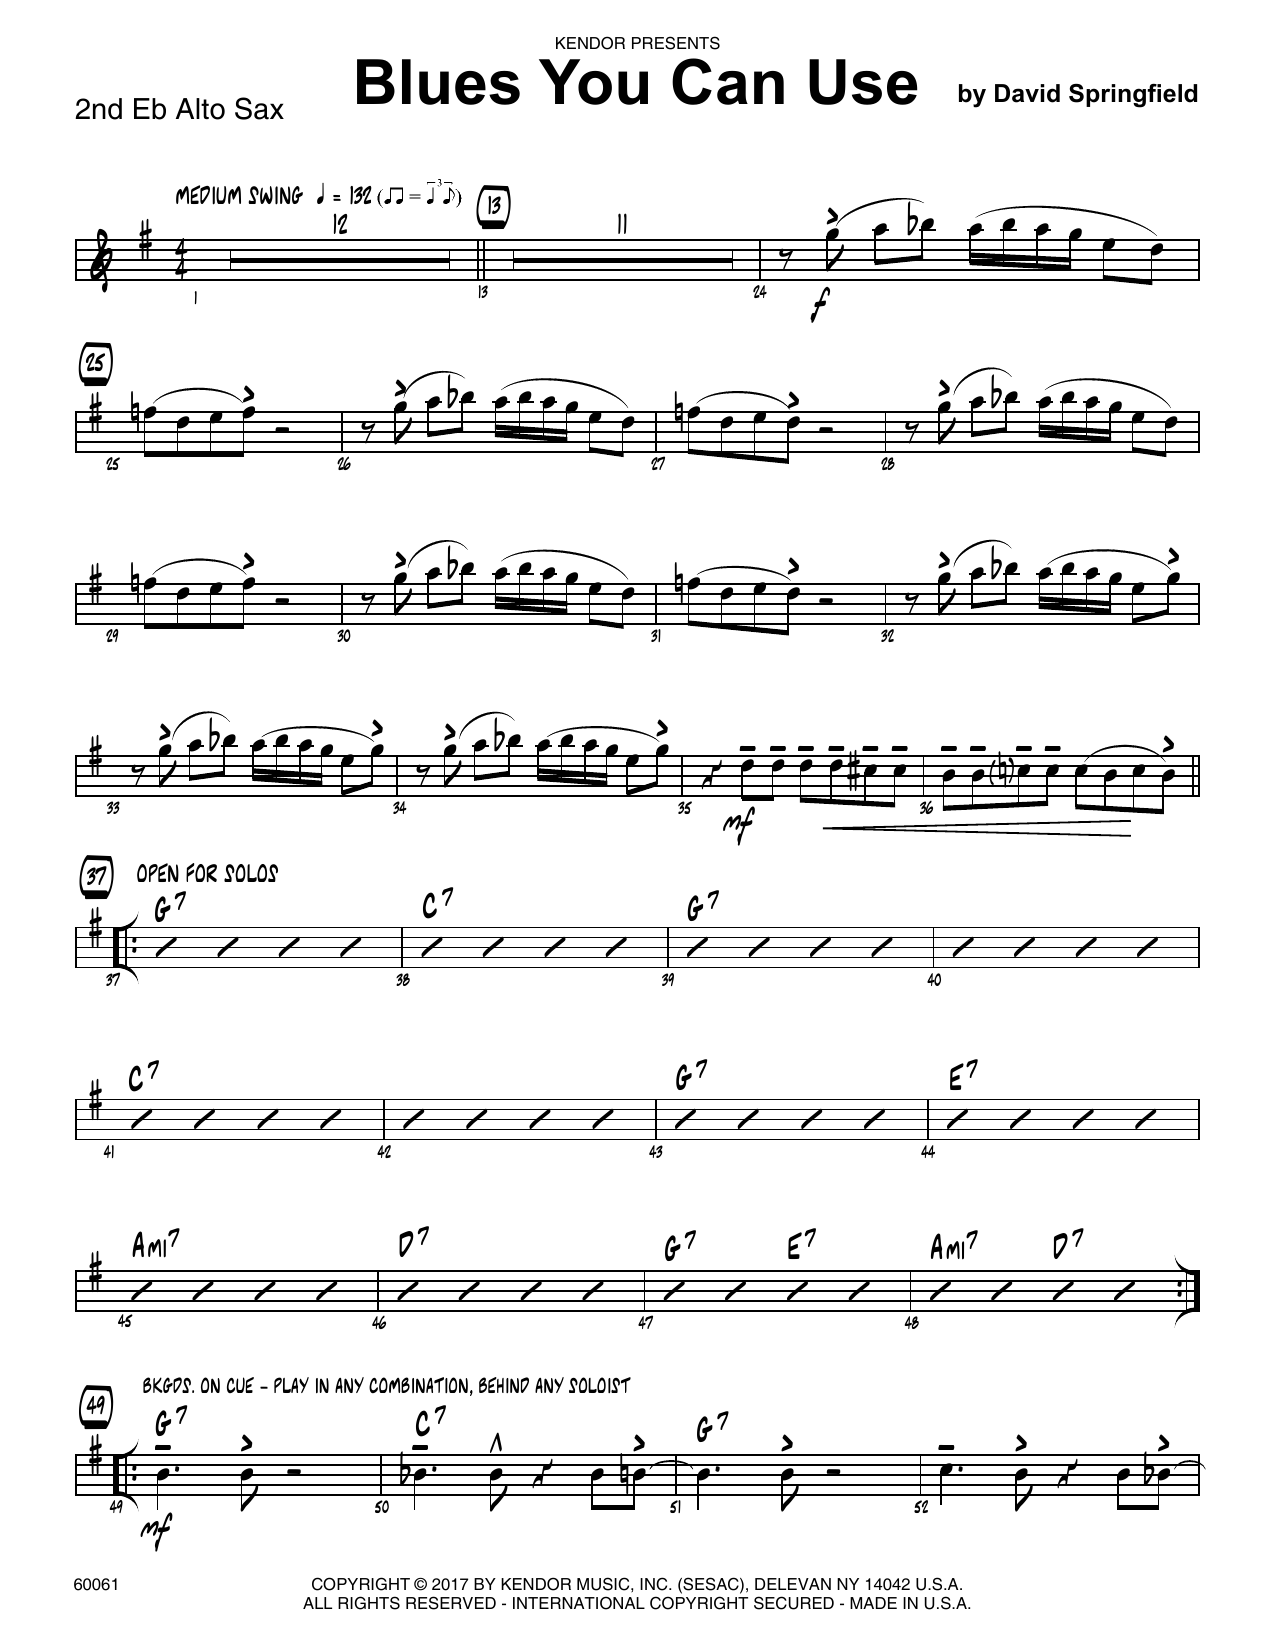 Download David Springfield Blues You Can Use - 2nd Eb Alto Saxopho Sheet Music